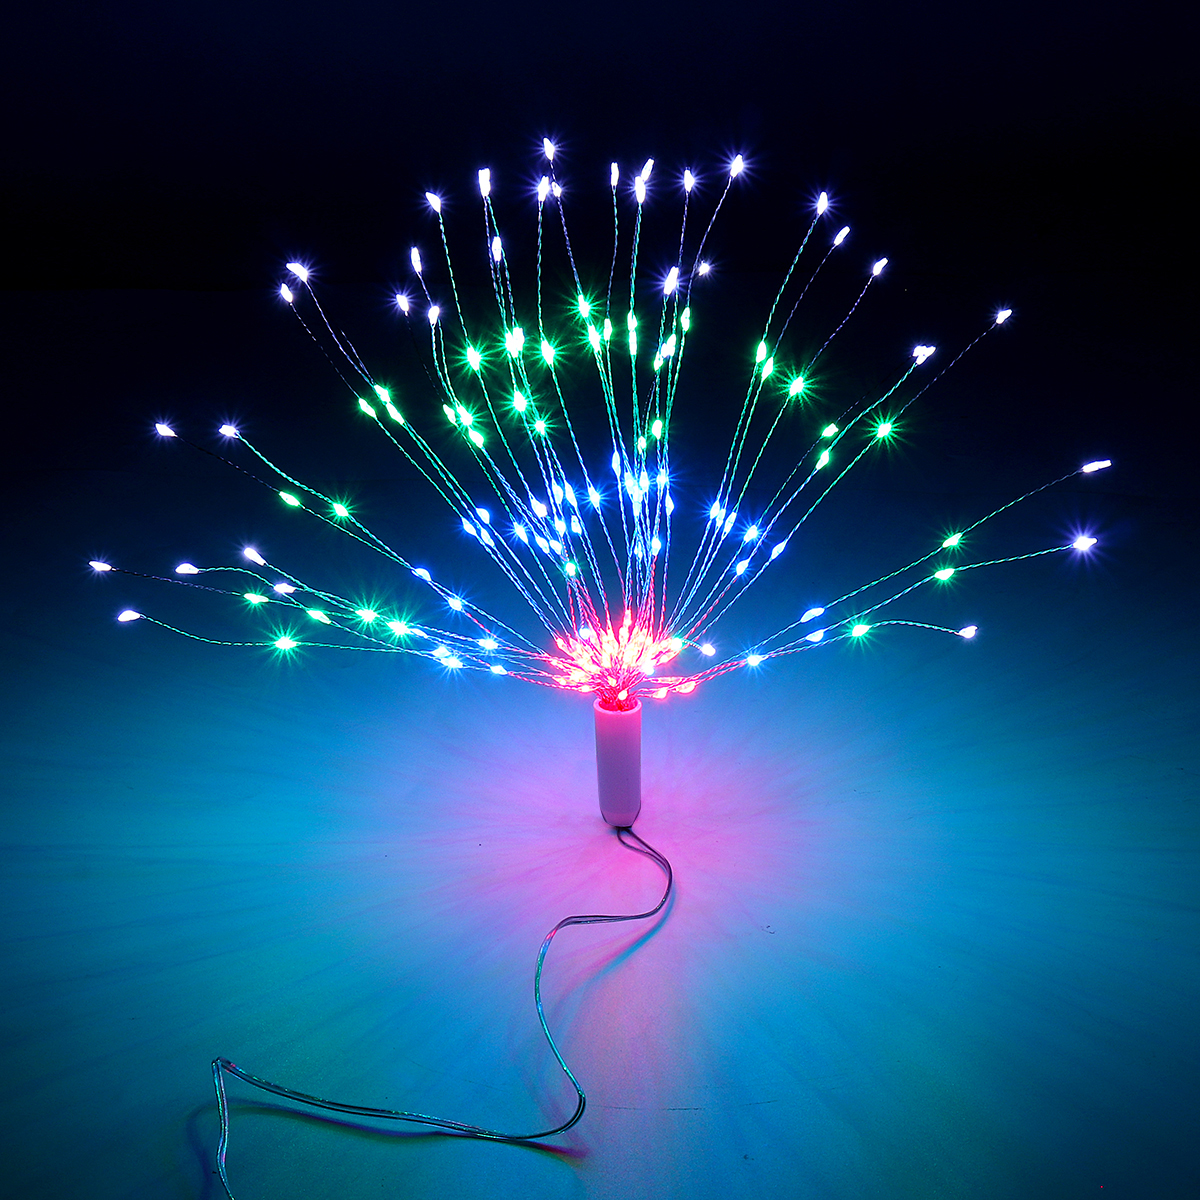 USB-Powered-DIY-Firework-Starburst-180-LED-Fairy-String-Light-Remote-Control-Christmas-Decor-DC5V-1378366-8